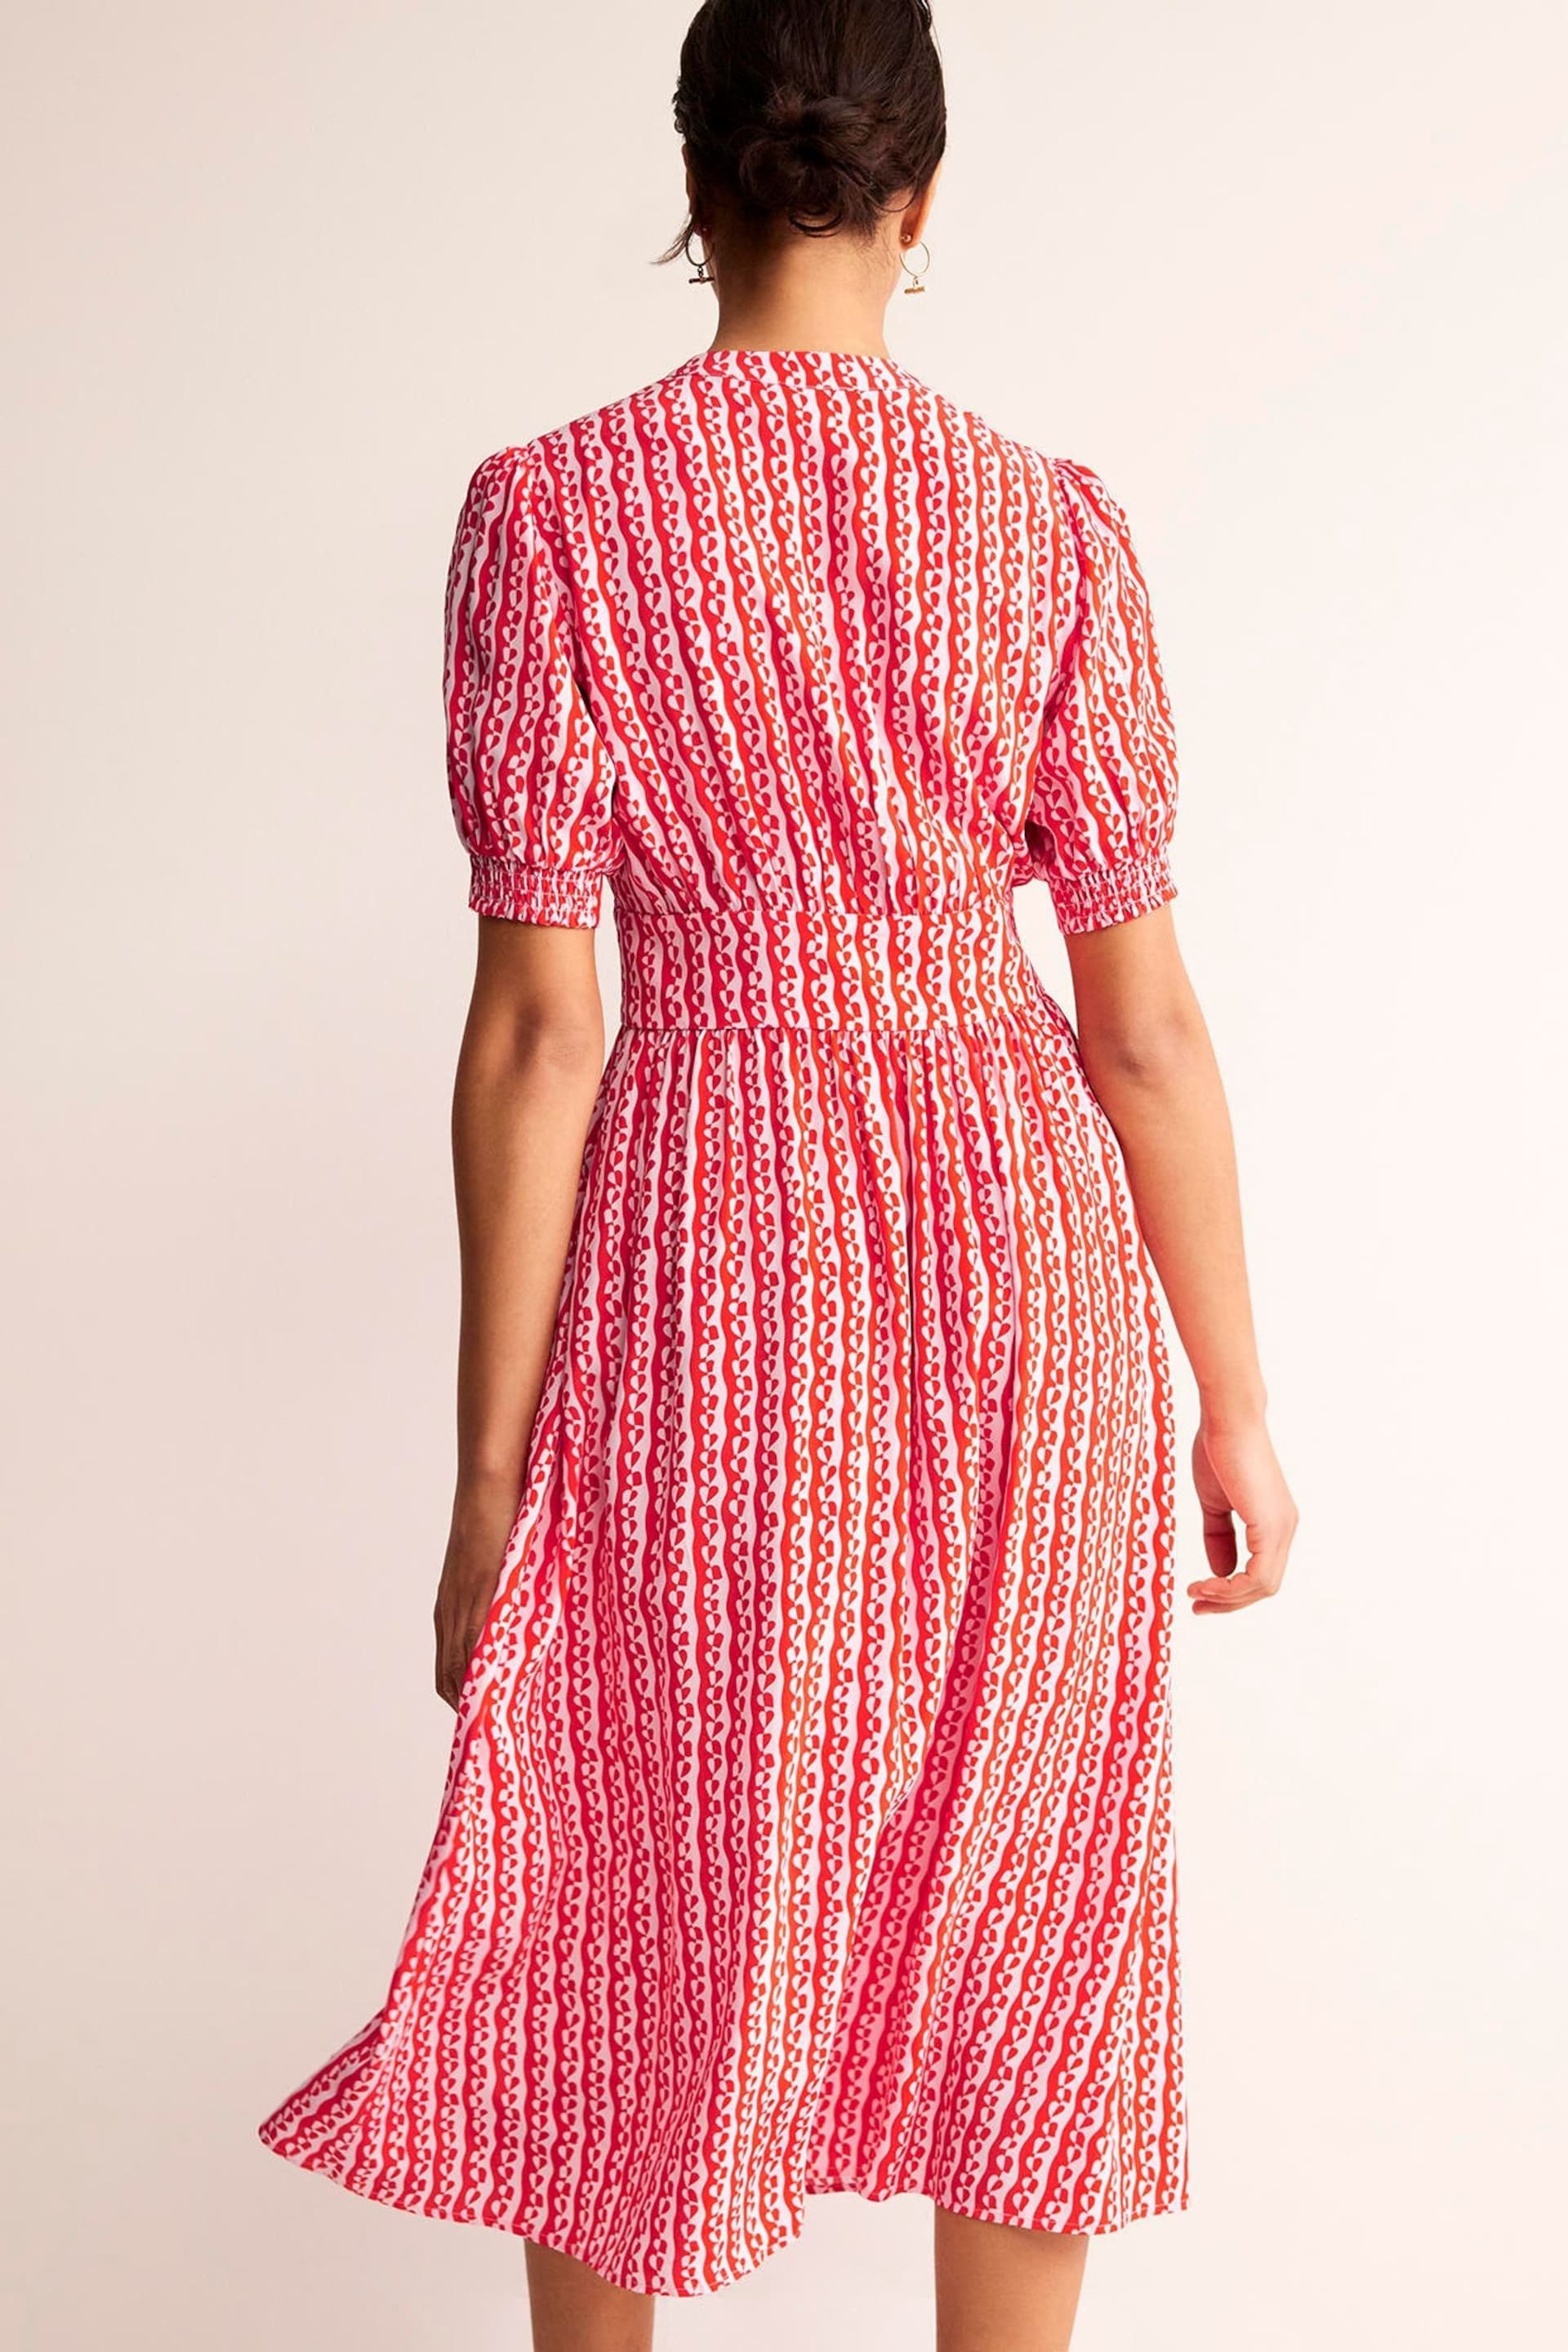 Boden Pink Elsa Midi Tea Dress - Image 2 of 5